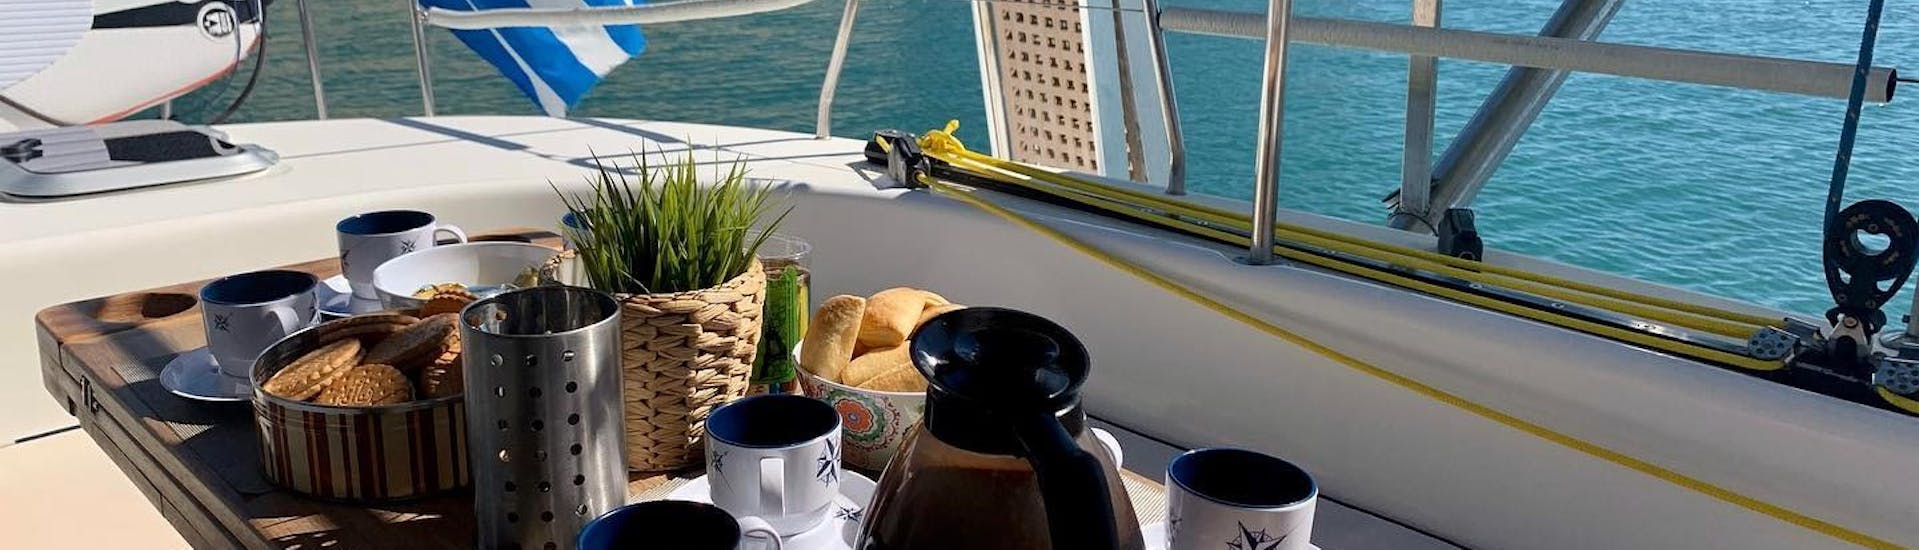 Le repas est servi lors de la Balade en catamaran d'Agios Nikolaos à la baie de Mirabello avec DanEri Yachts Crete.